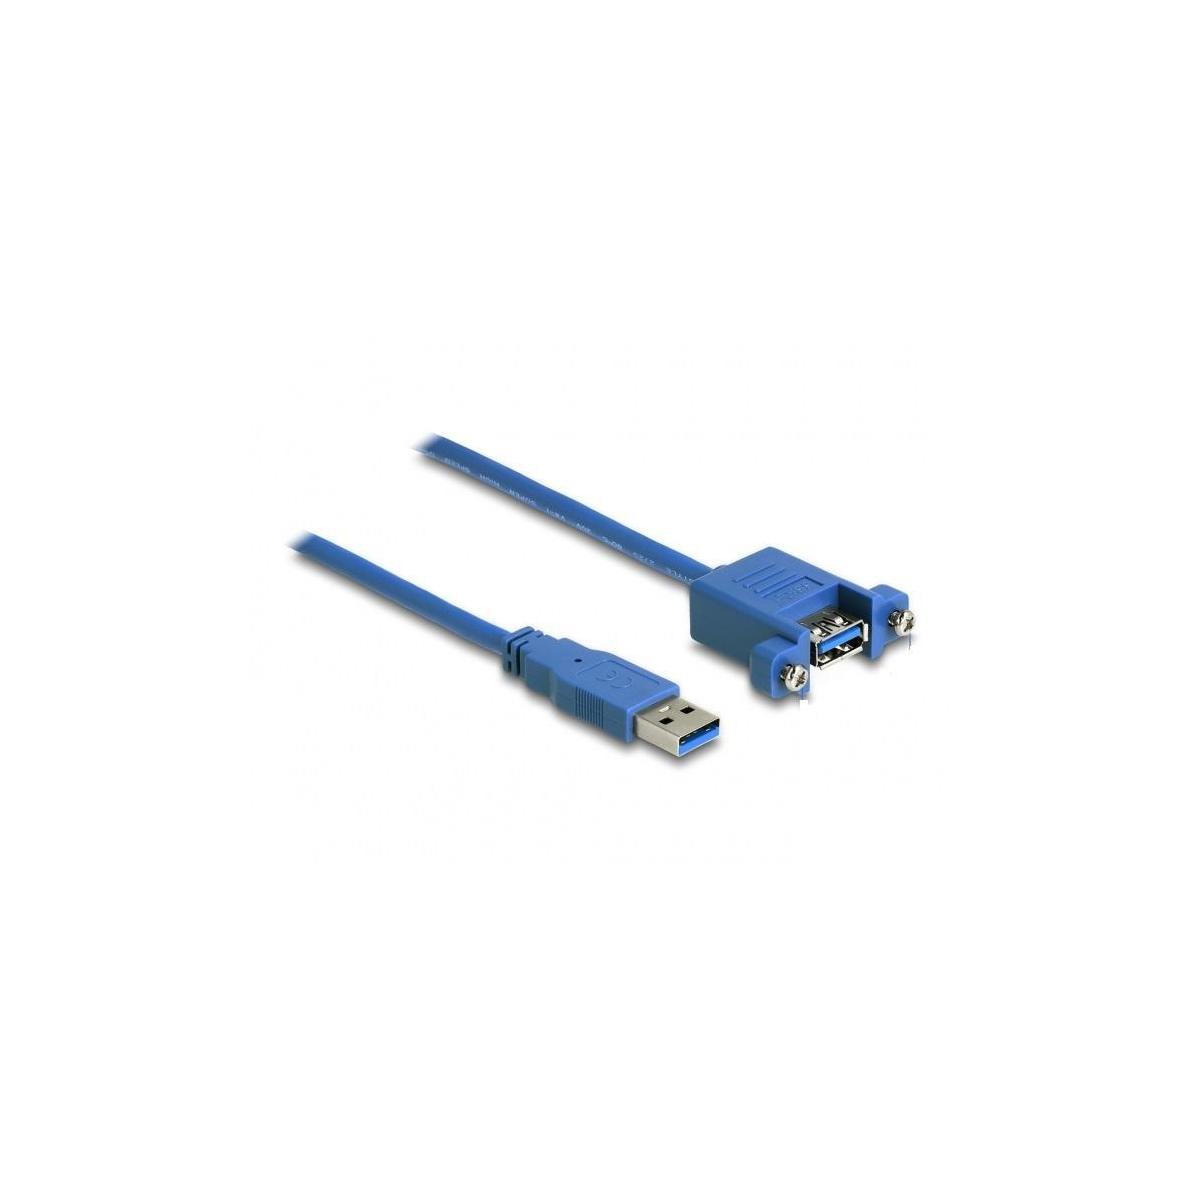 DELOCK 85112 USB Kabel, Blau